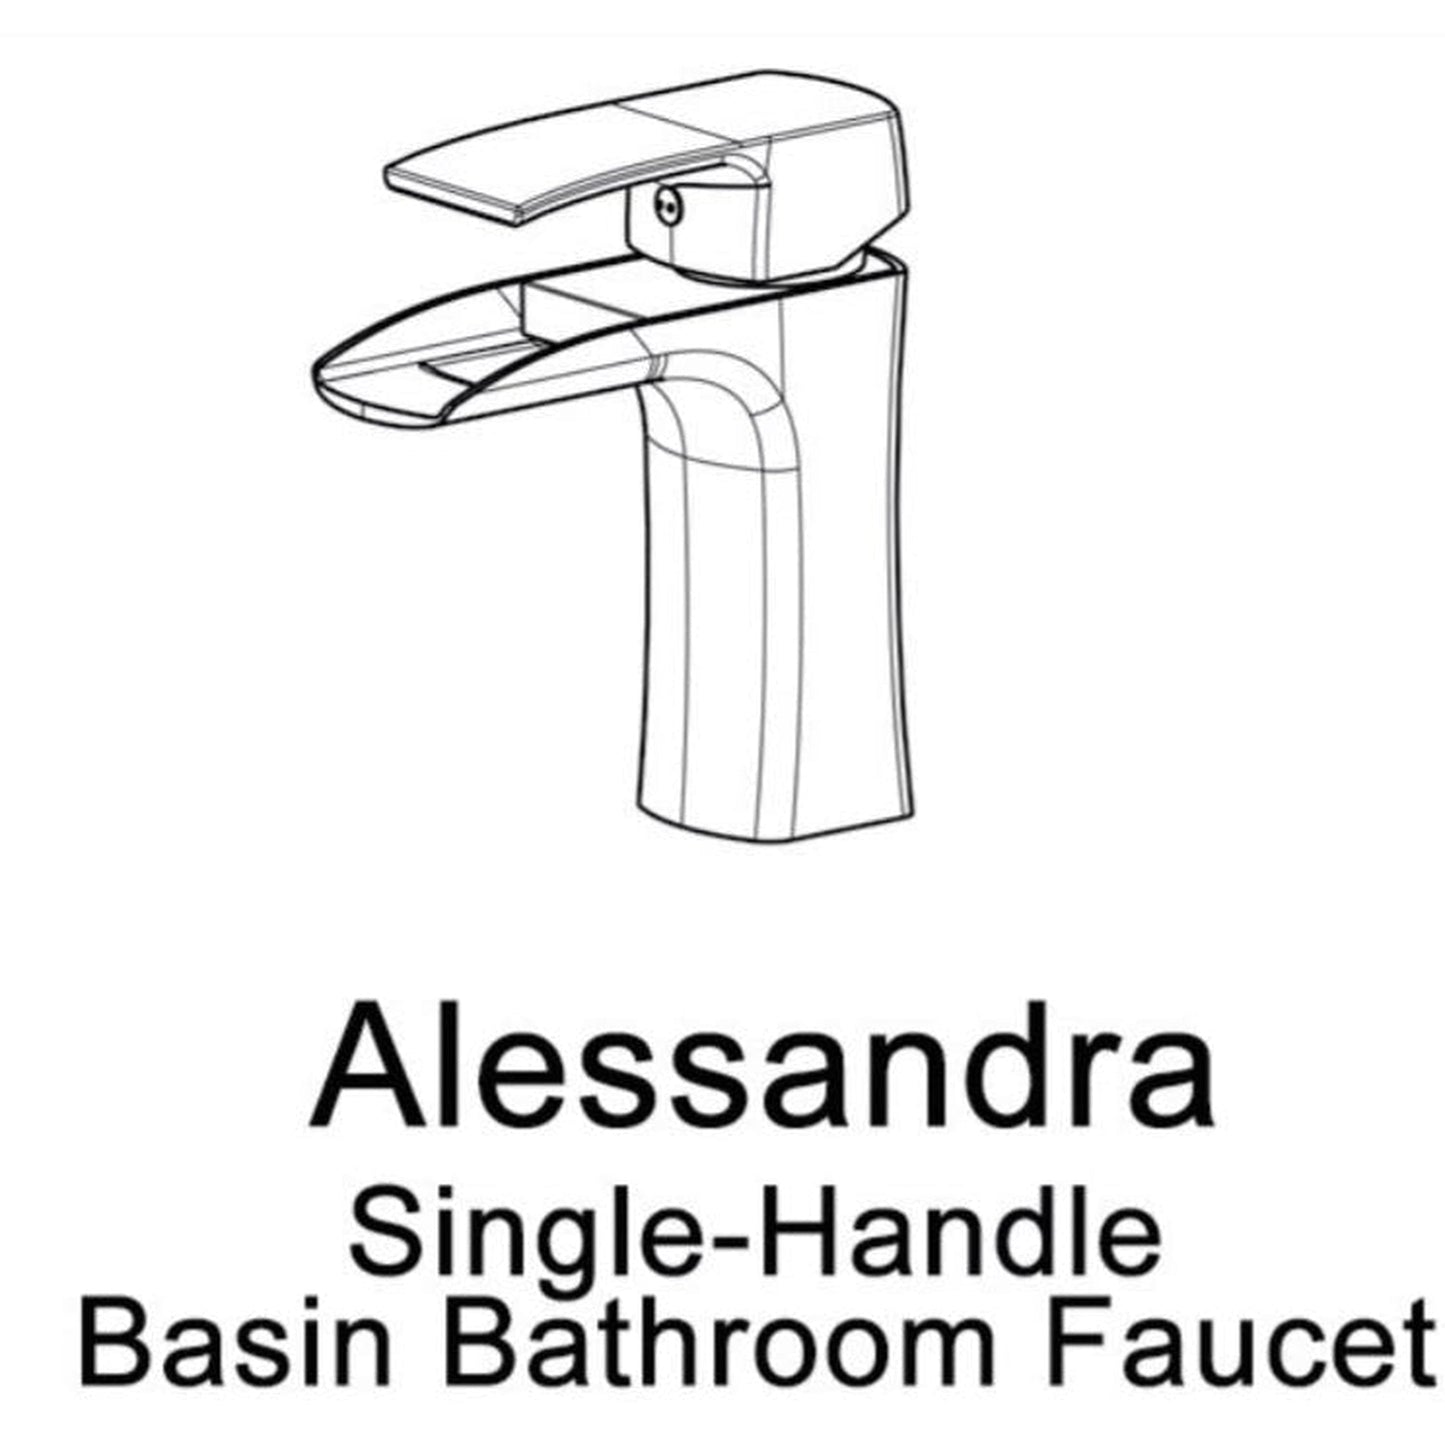 Vinnova Alessandra 7" Single Hole Polished Chrome Low Arc Waterfall Vessel Bathroom Sink Faucet